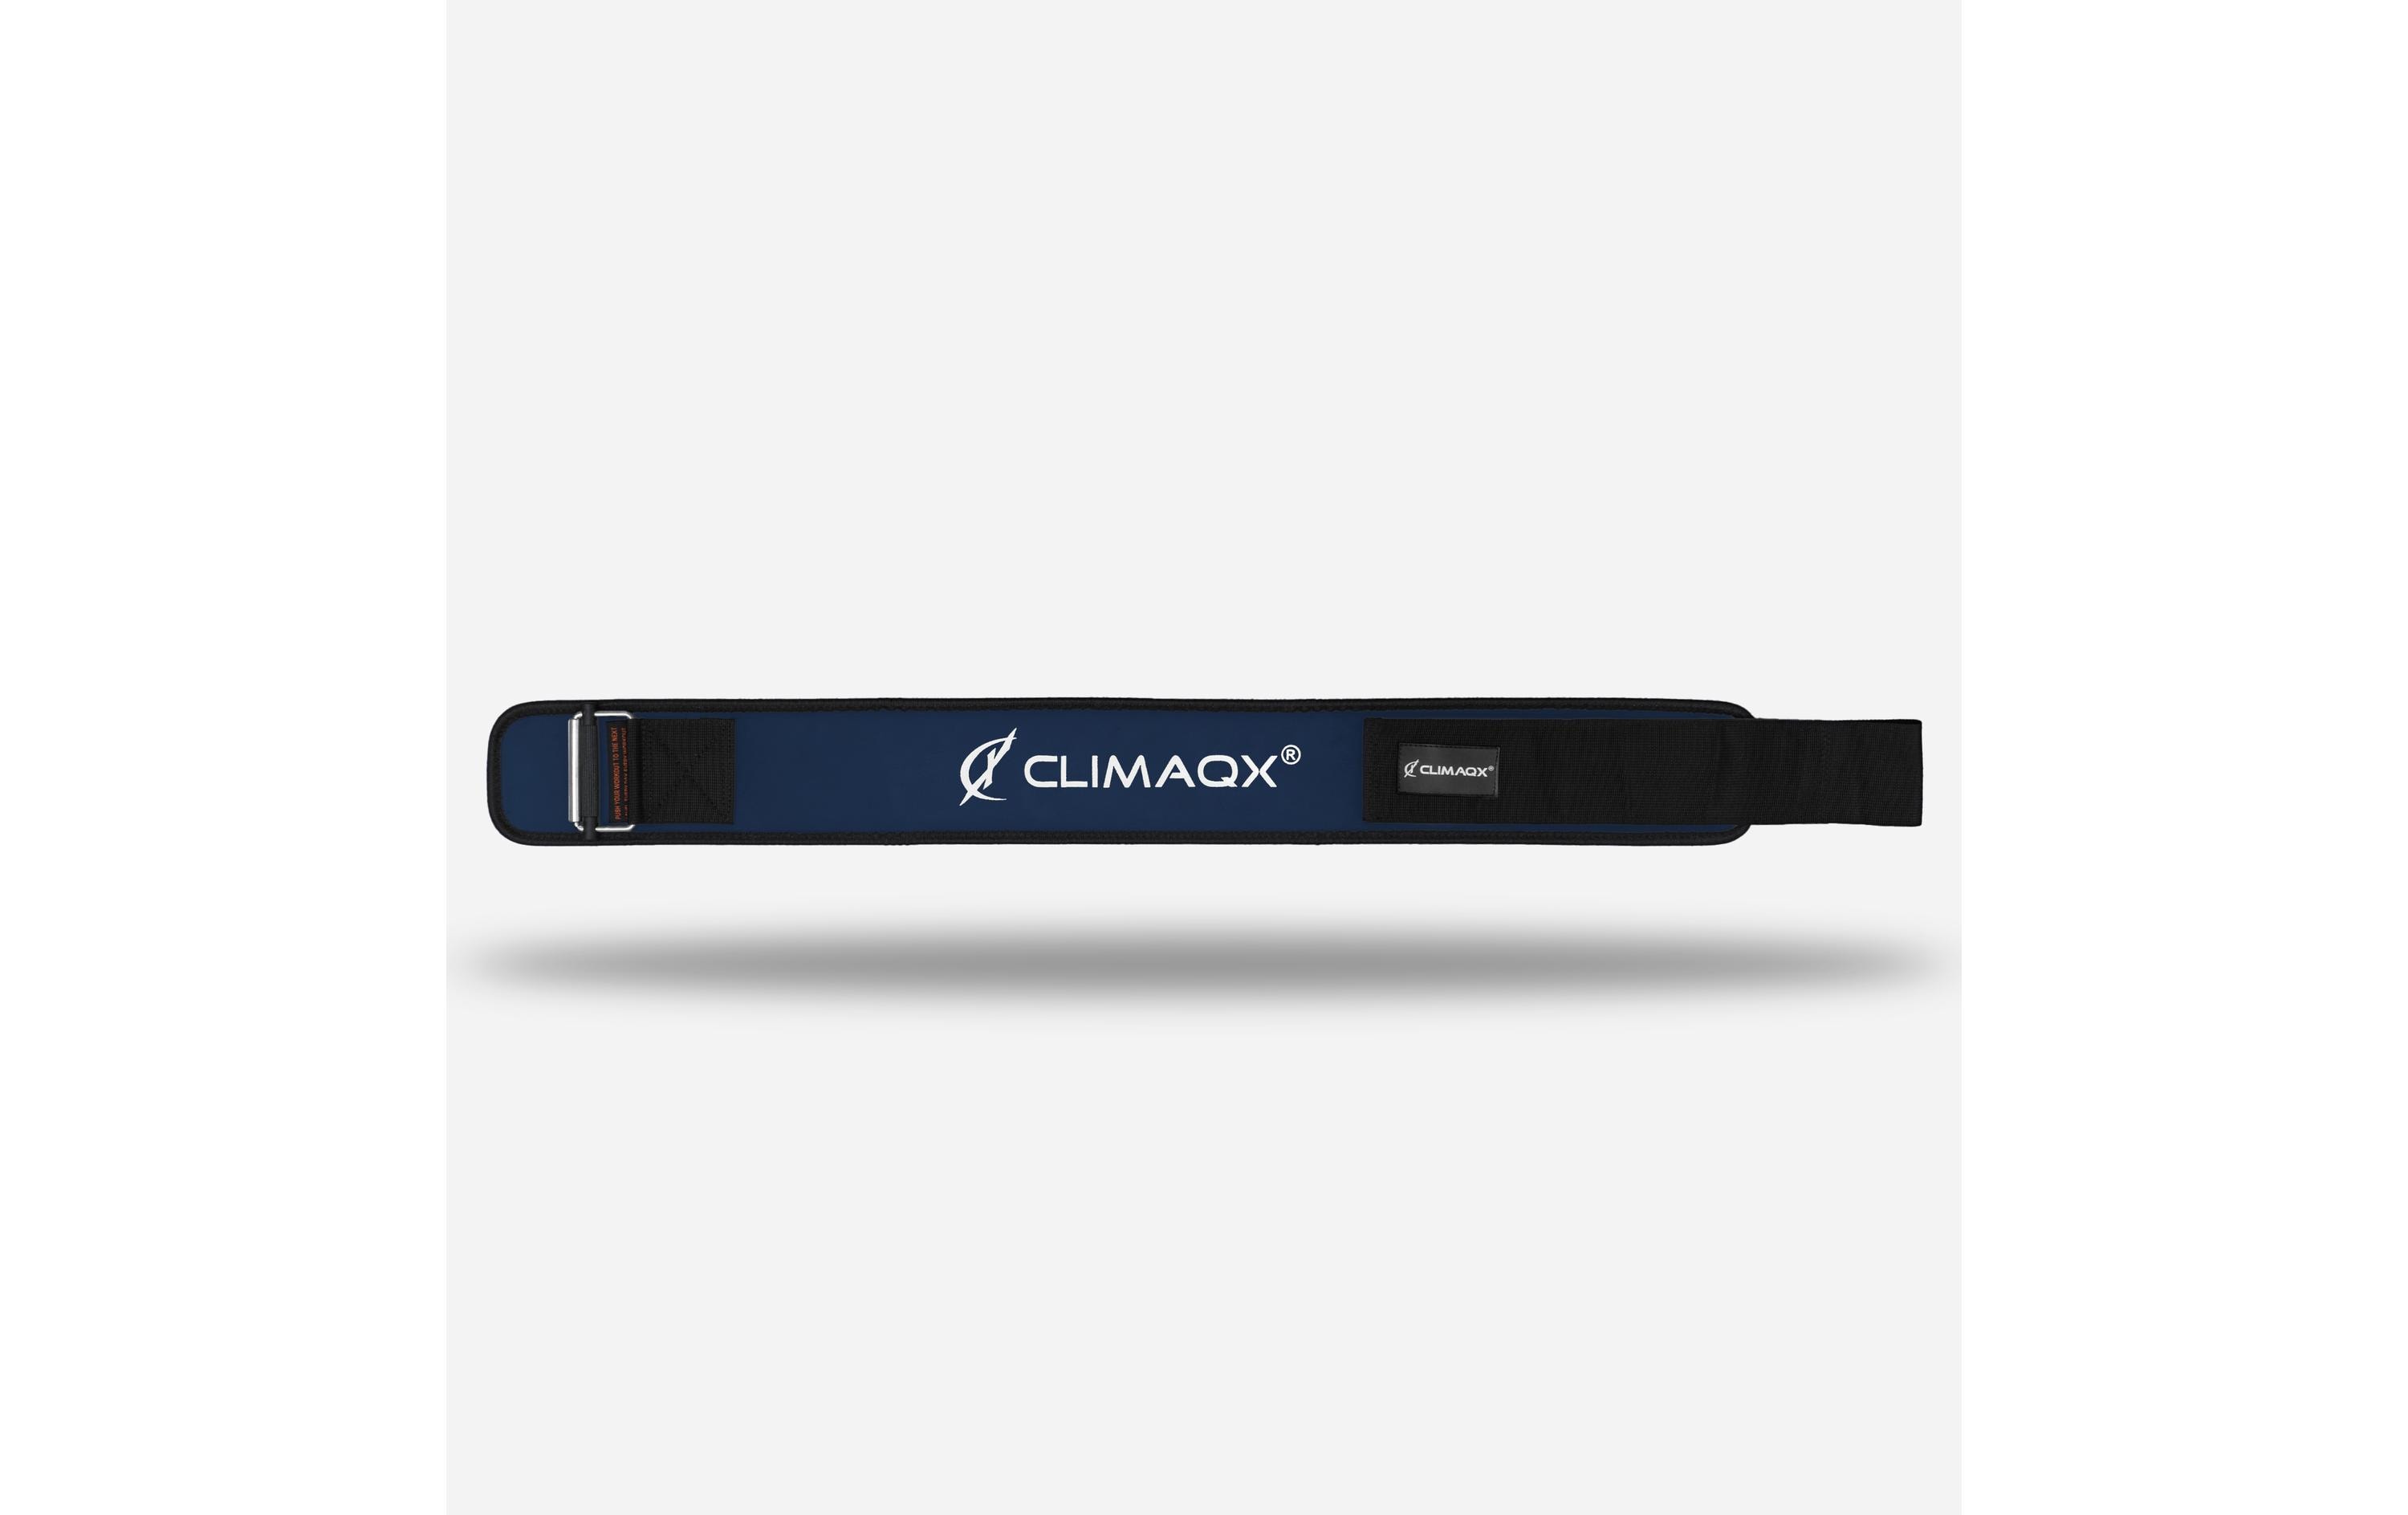 Climaqx Evolution Lifting Belt XL